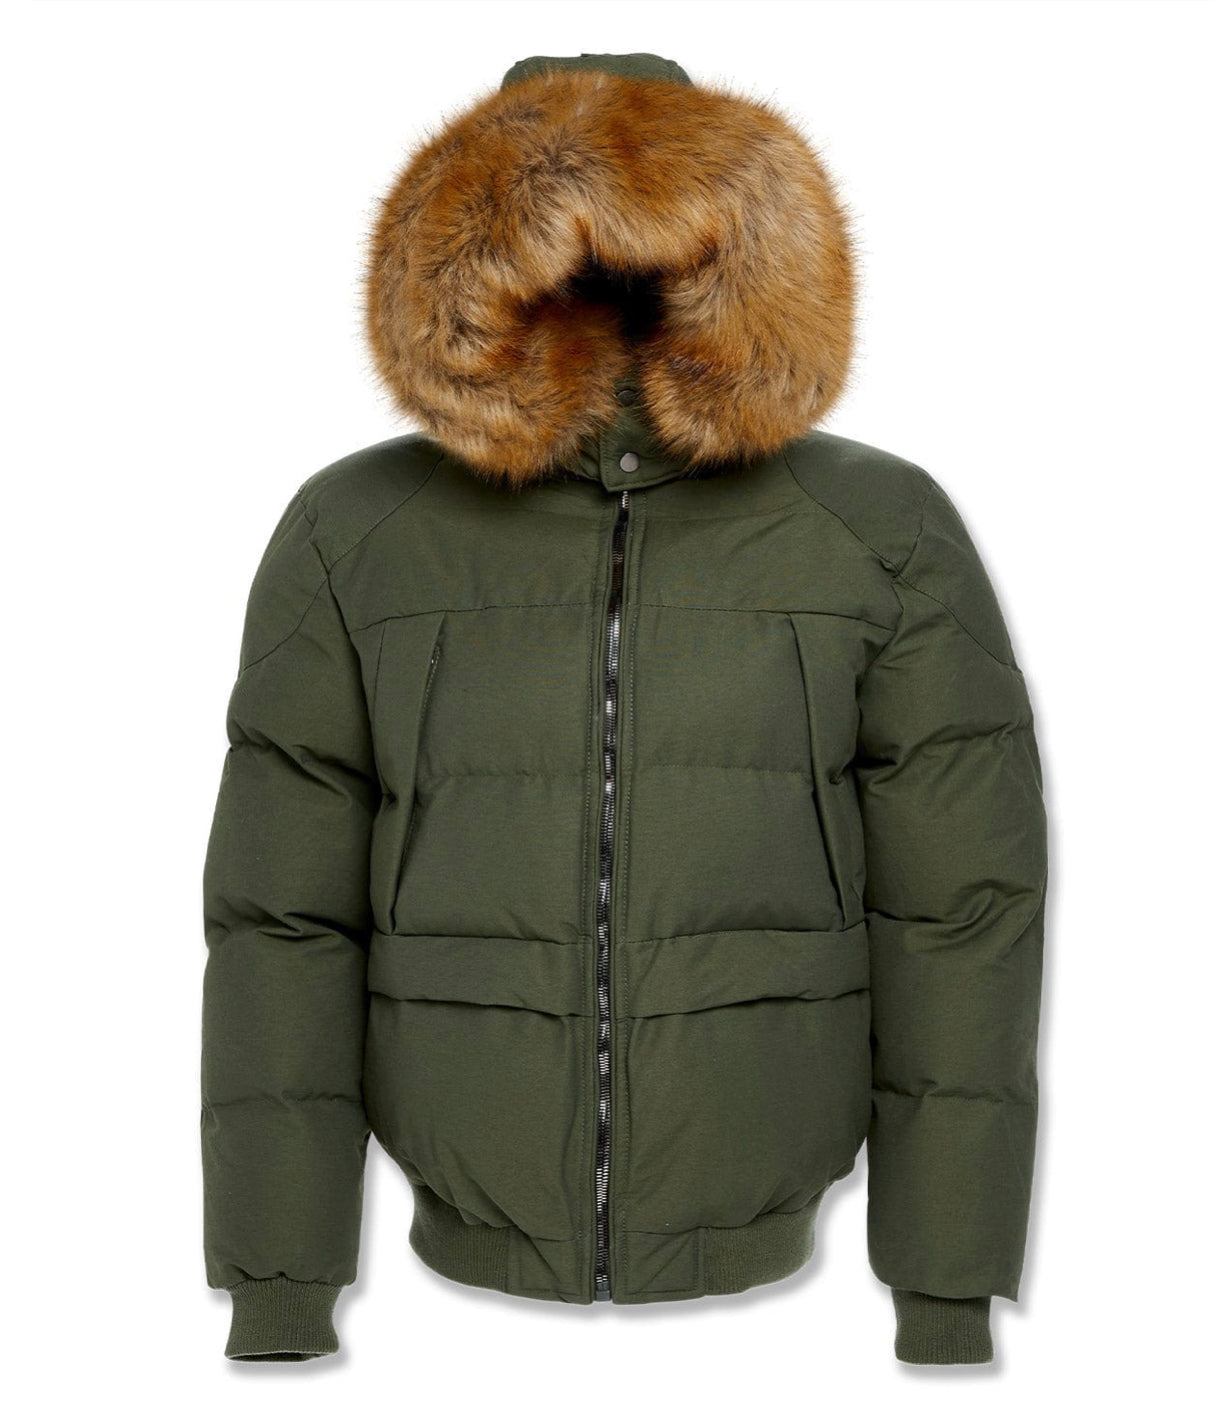 Jordan Craig Hollis  Canvas Puffer jacket w fur hood Army Green olive 91615 91541